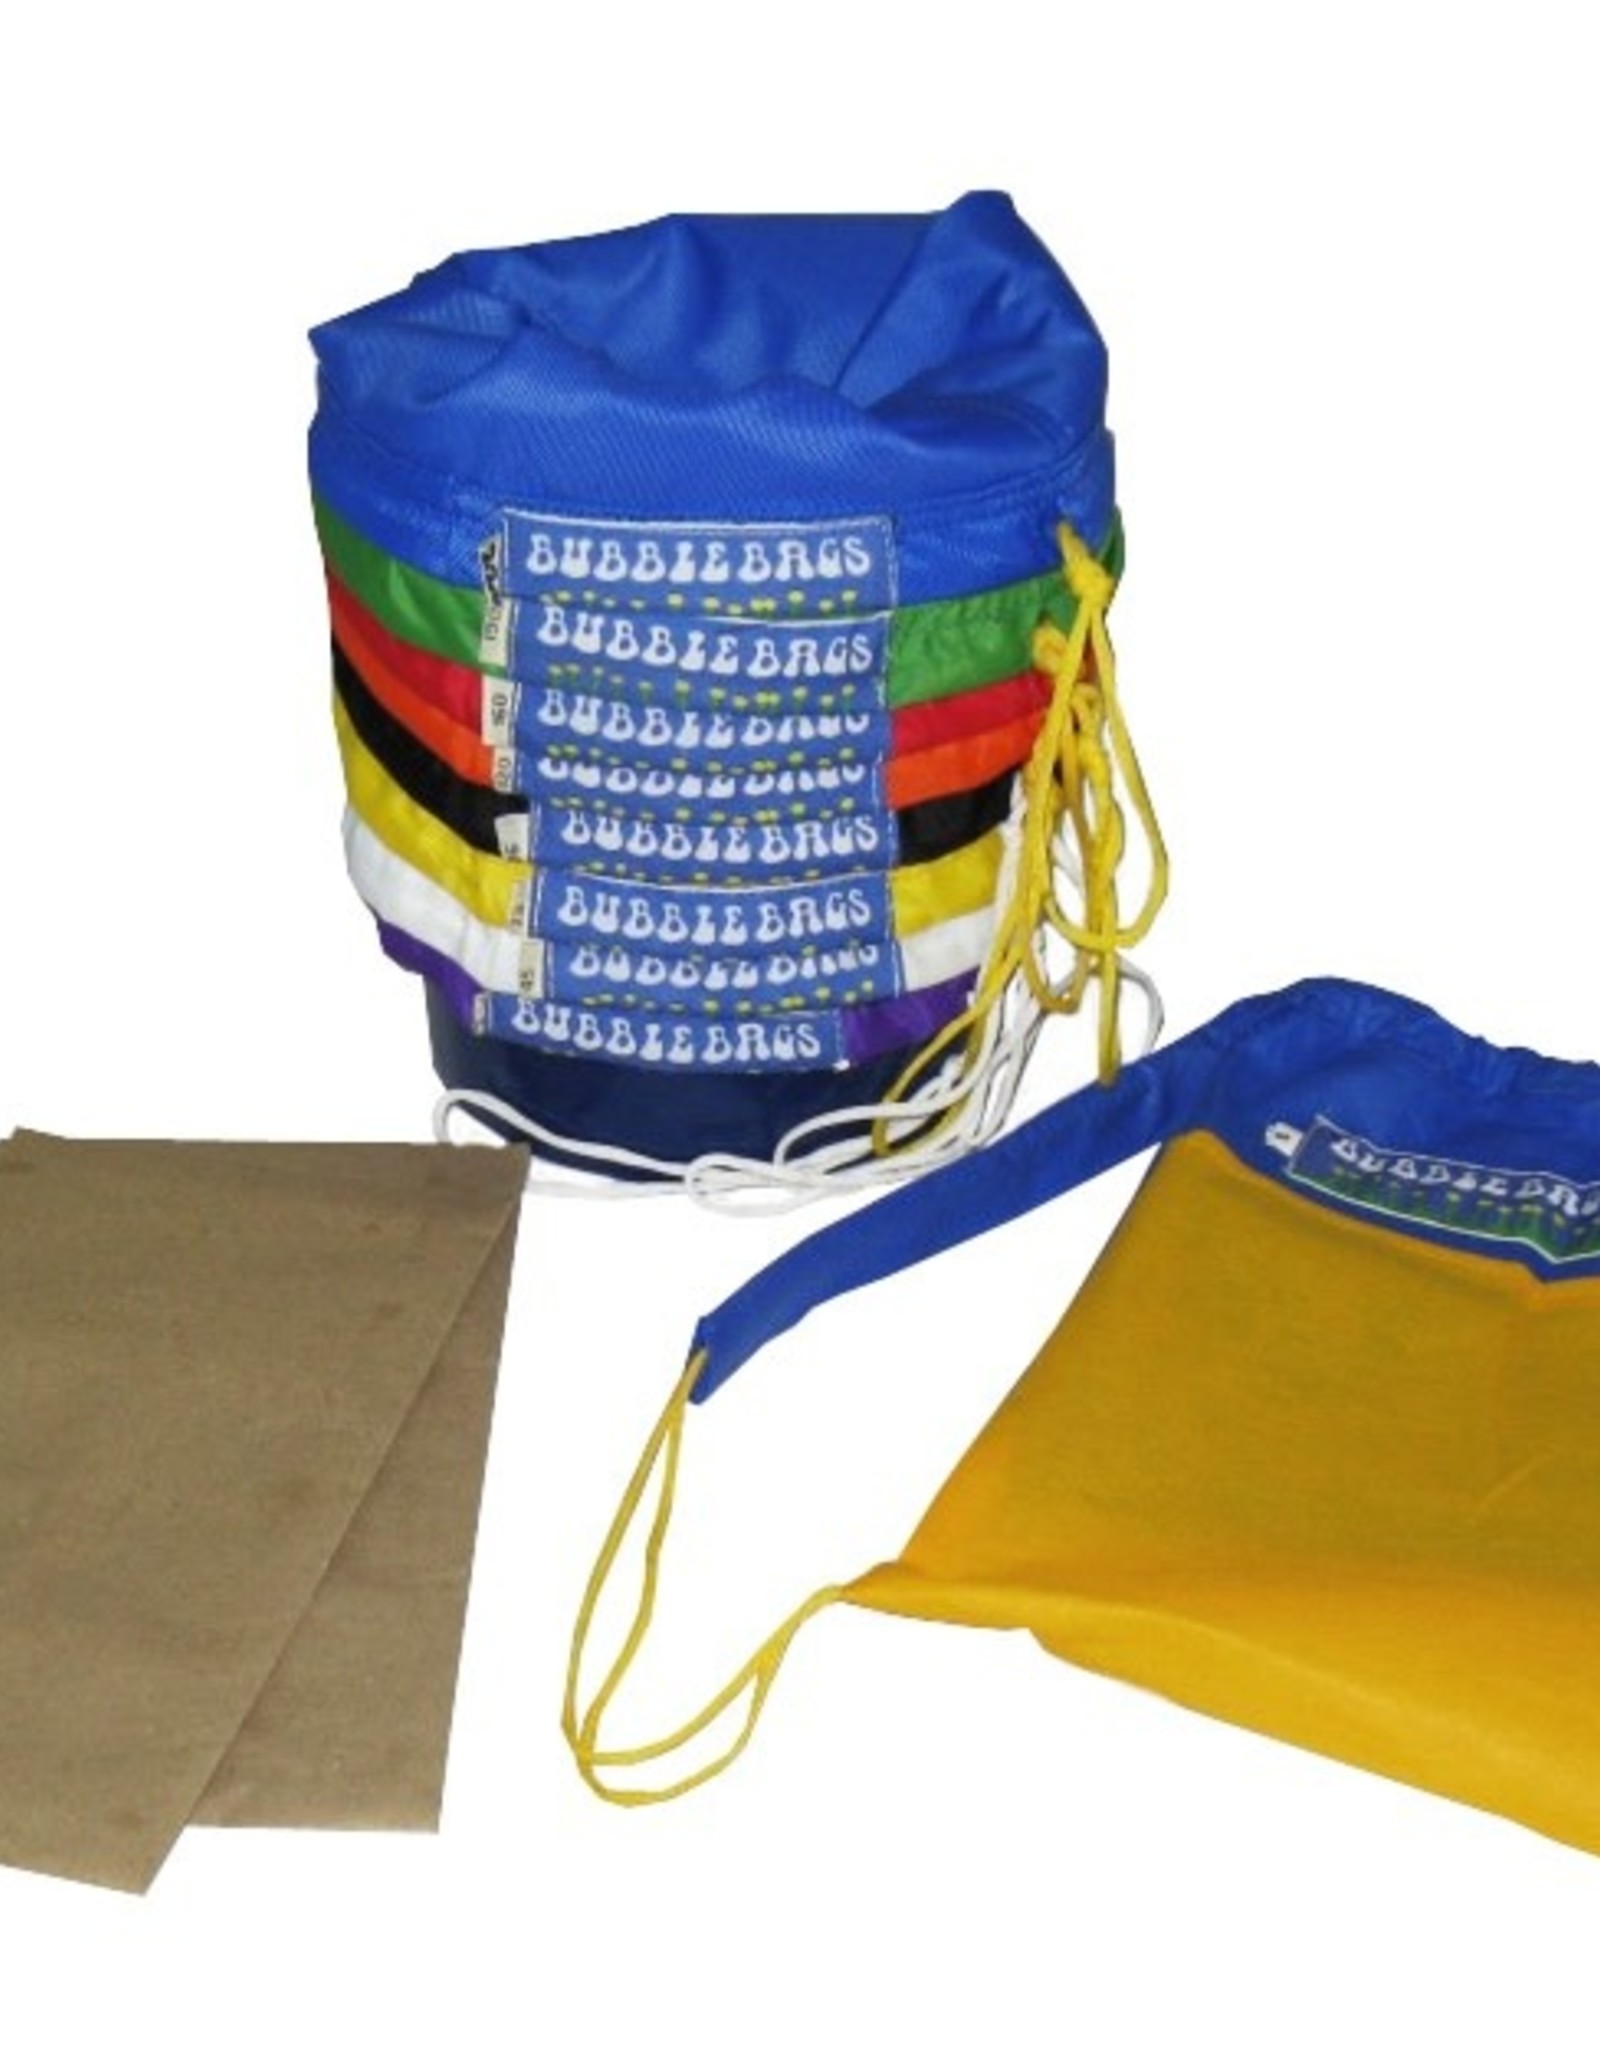 Standard 1 Gallon 8 Bag Kit